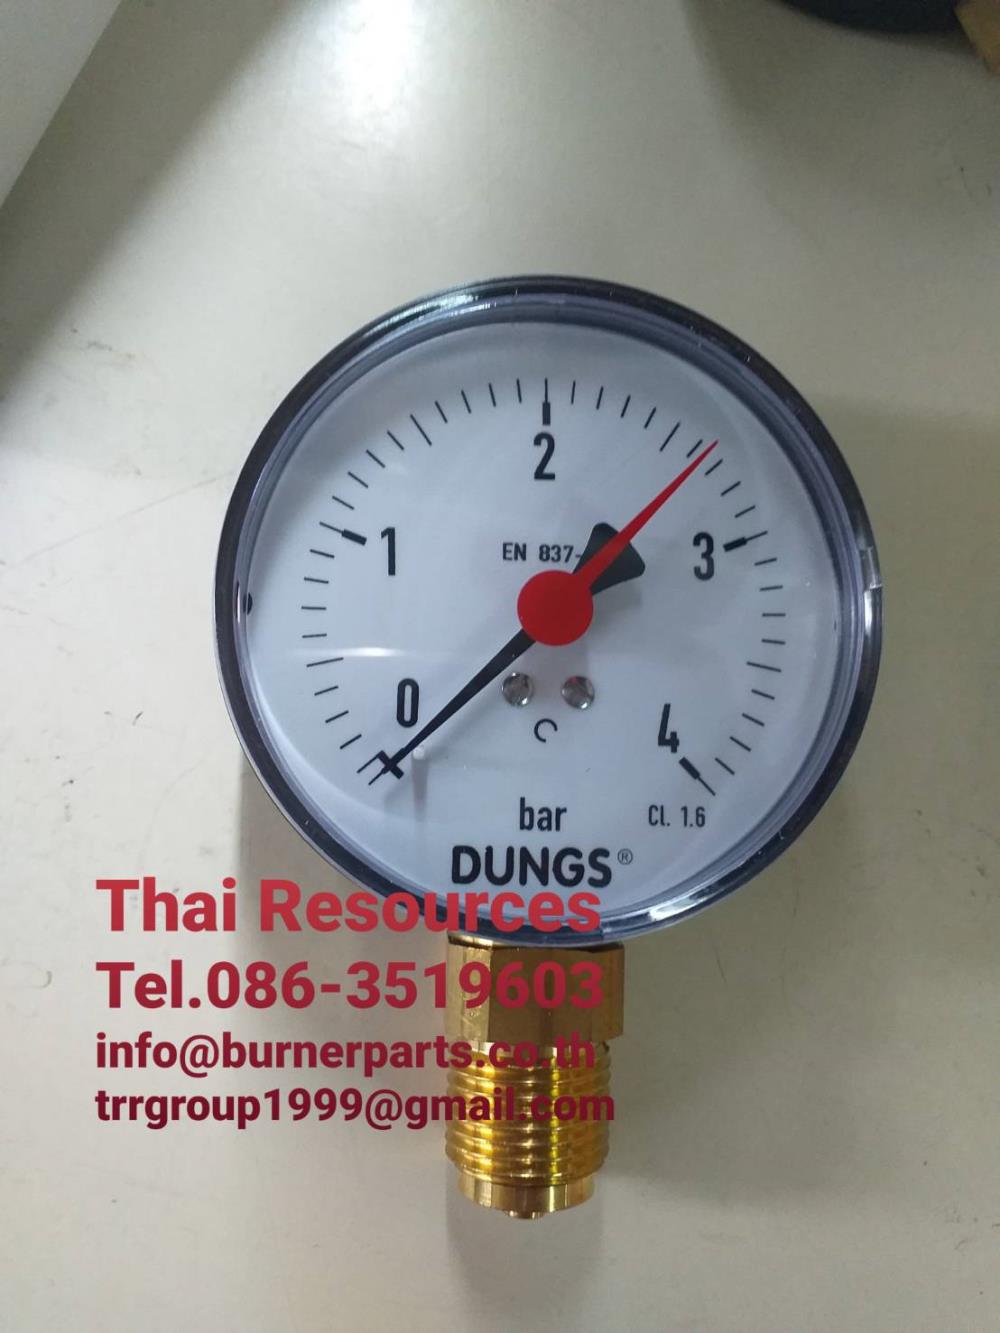 DUNGS Pressure Gauge  Range: 0-4 bar Connections: 1/2"#DUNGS Pressure Gauge  Range: 0-4 bar Connections: 1/2",DUNGS Pressure Gauge  Range: 0-4 bar Connections: 1/2"#DUNGS Pressure Gauge  Range: 0-4 bar Connections: 1/2",DUNGS Pressure Gauge  Range: 0-4 bar Connections: 1/2"#DUNGS Pressure Gauge  Range: 0-4 bar Connections: 1/2",Instruments and Controls/Gauges